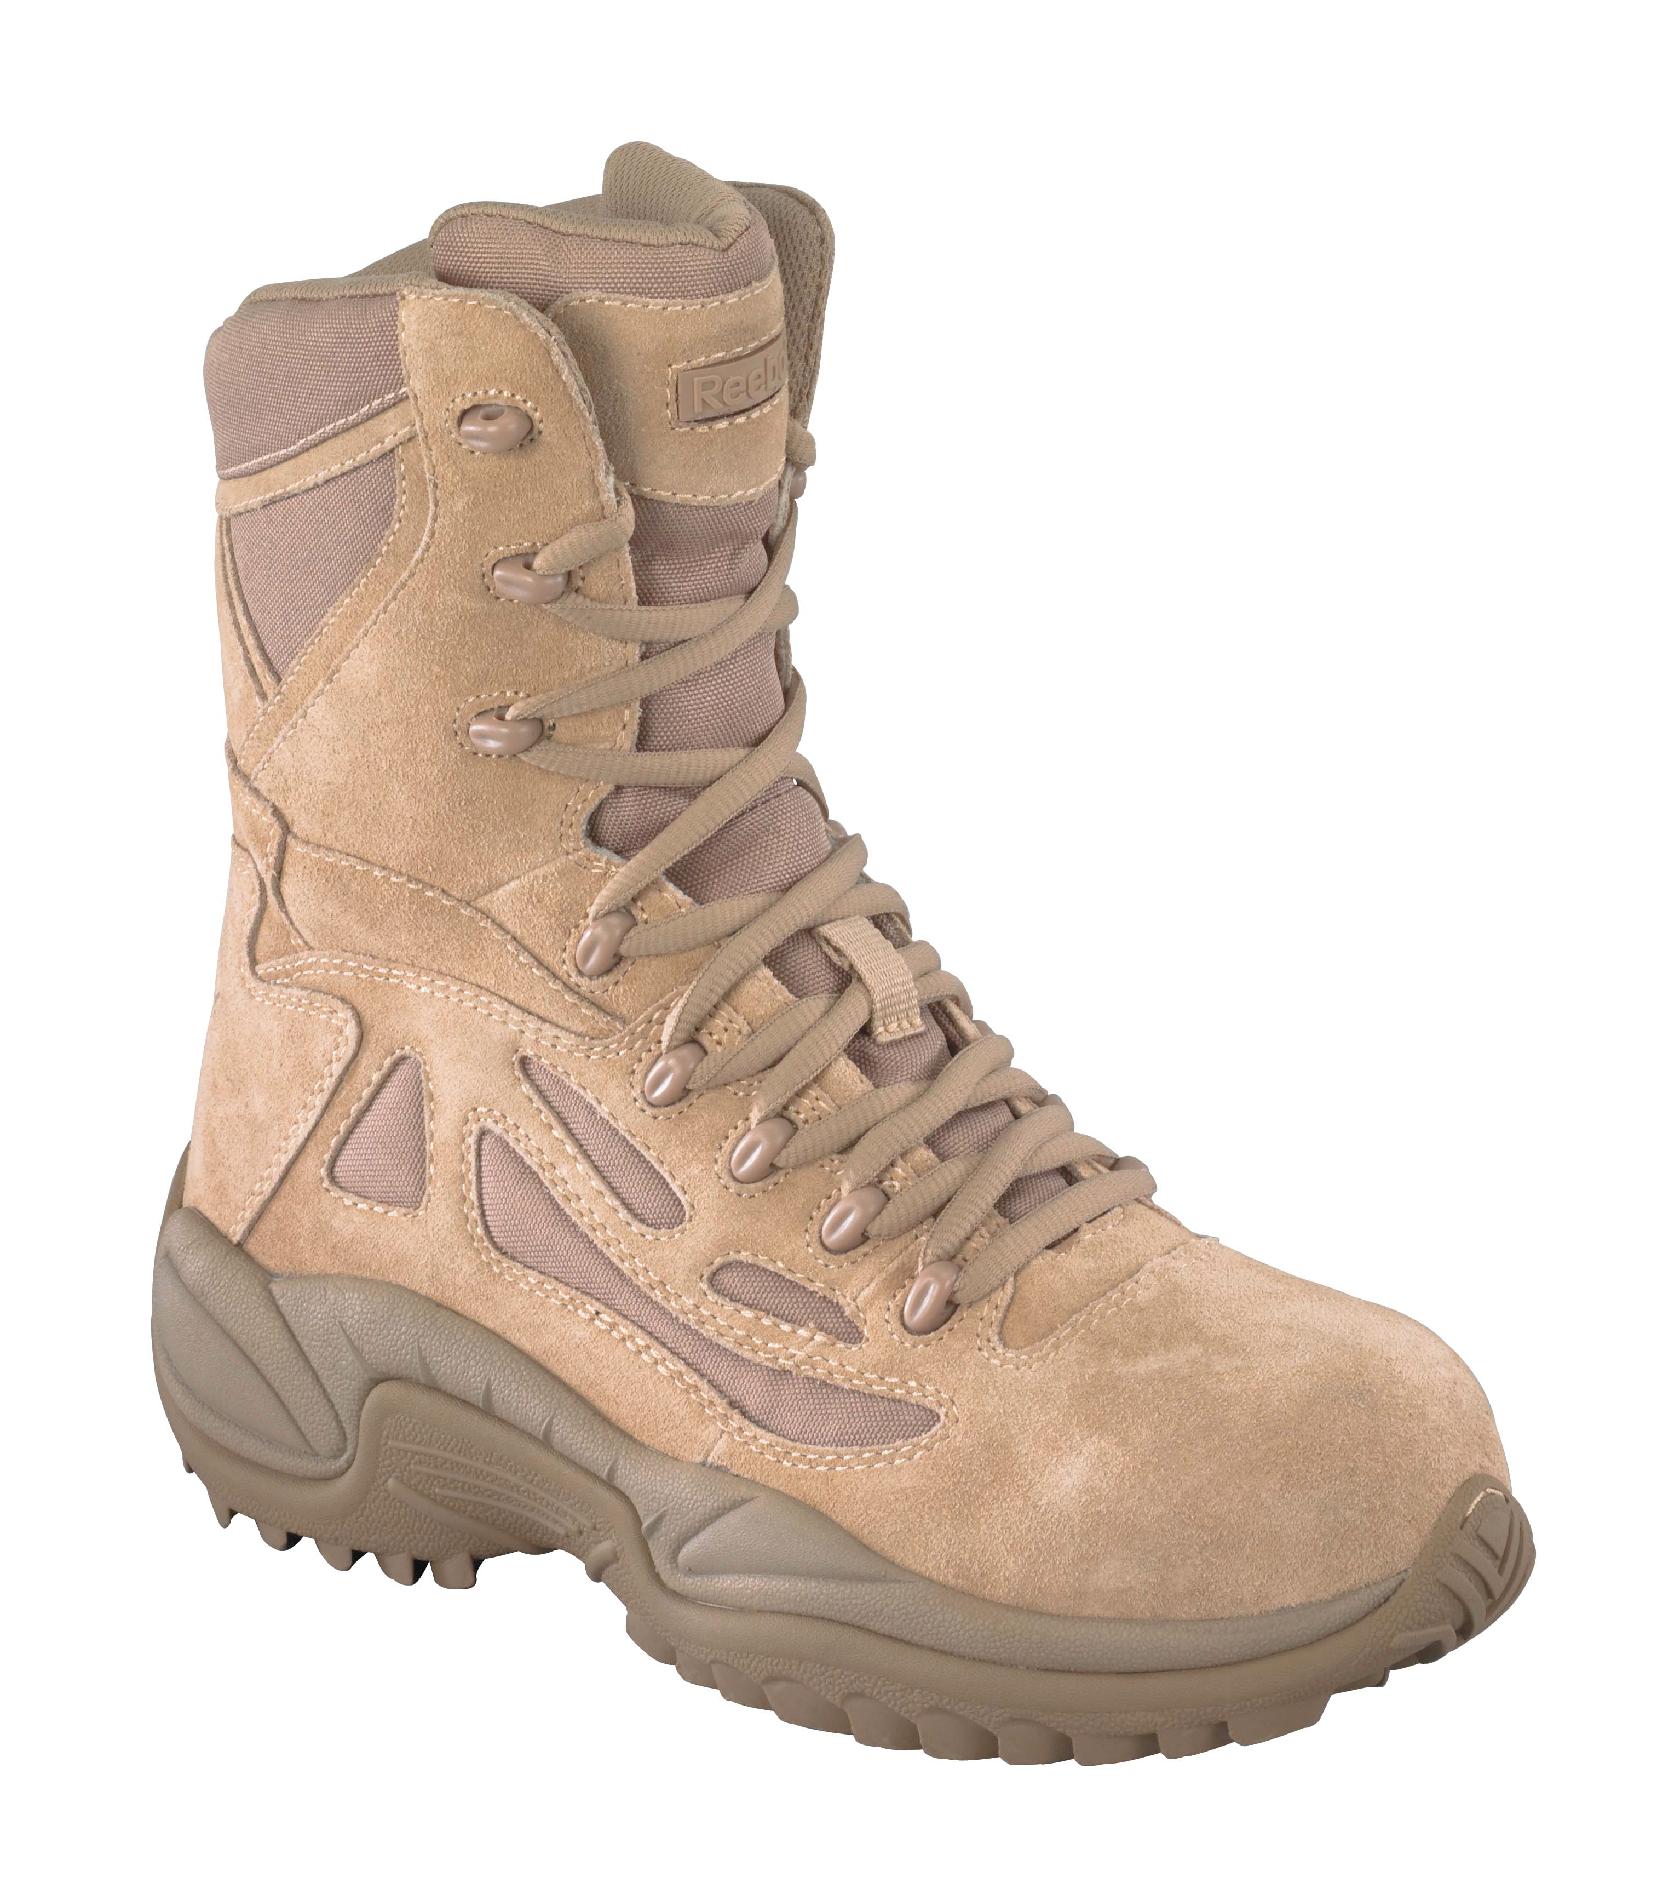 Reebok Men's desert tan Rapid Response RB comp toe stealth 8 inch boot